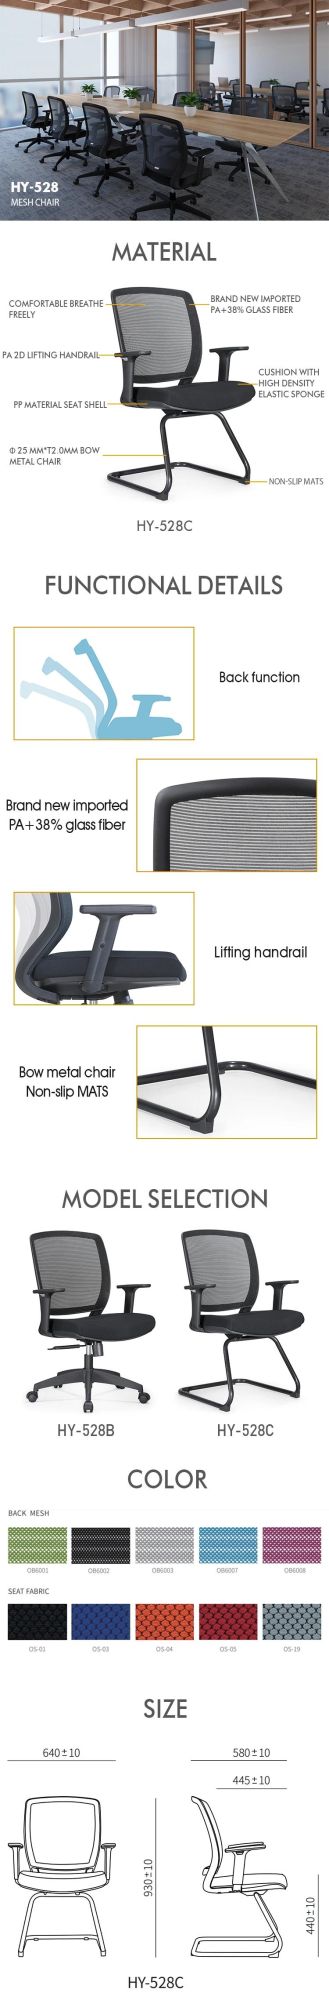 Ergonomic Design Armrest Adjustable Vistor Meeting Room Chair